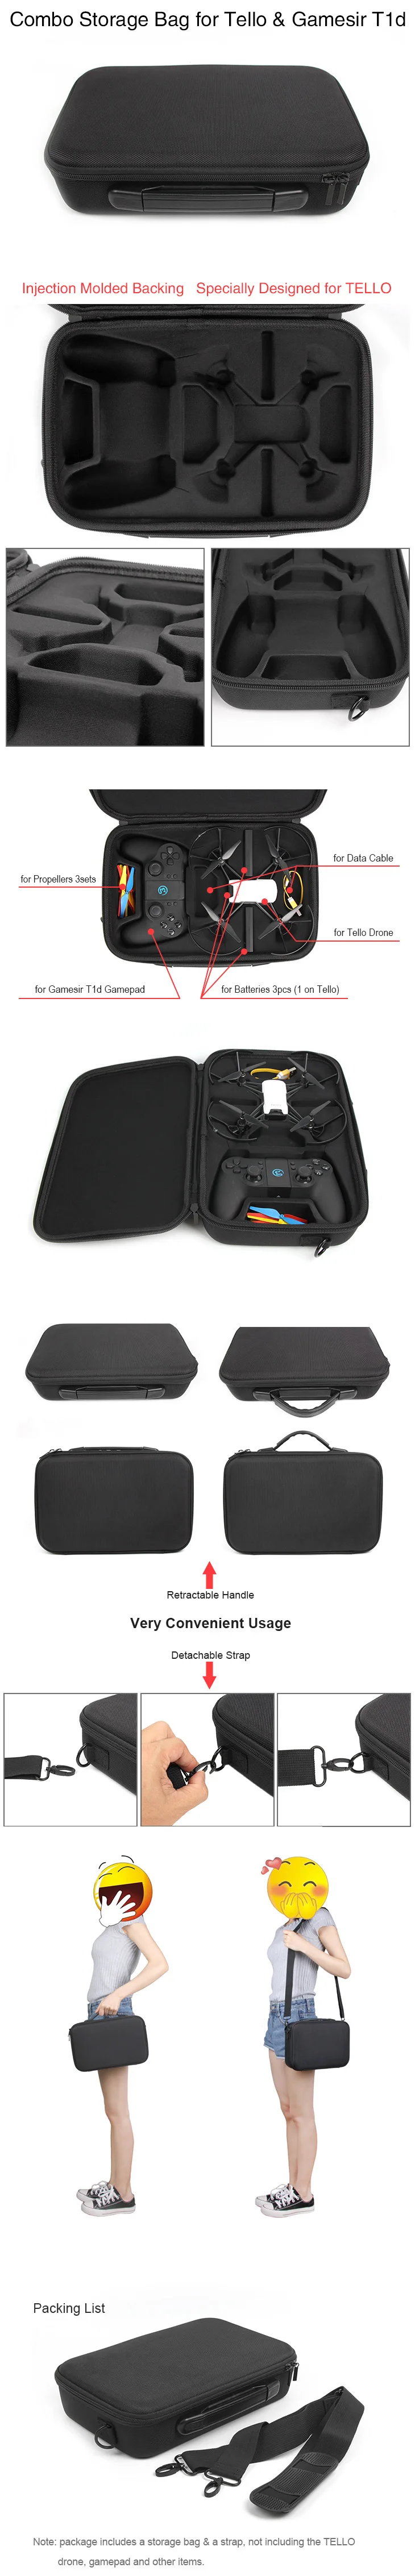 DJI tello сумка переносная сумка на плечо для DJI tello Дрон и контроллер Gamesir T1d геймпад аксессуары